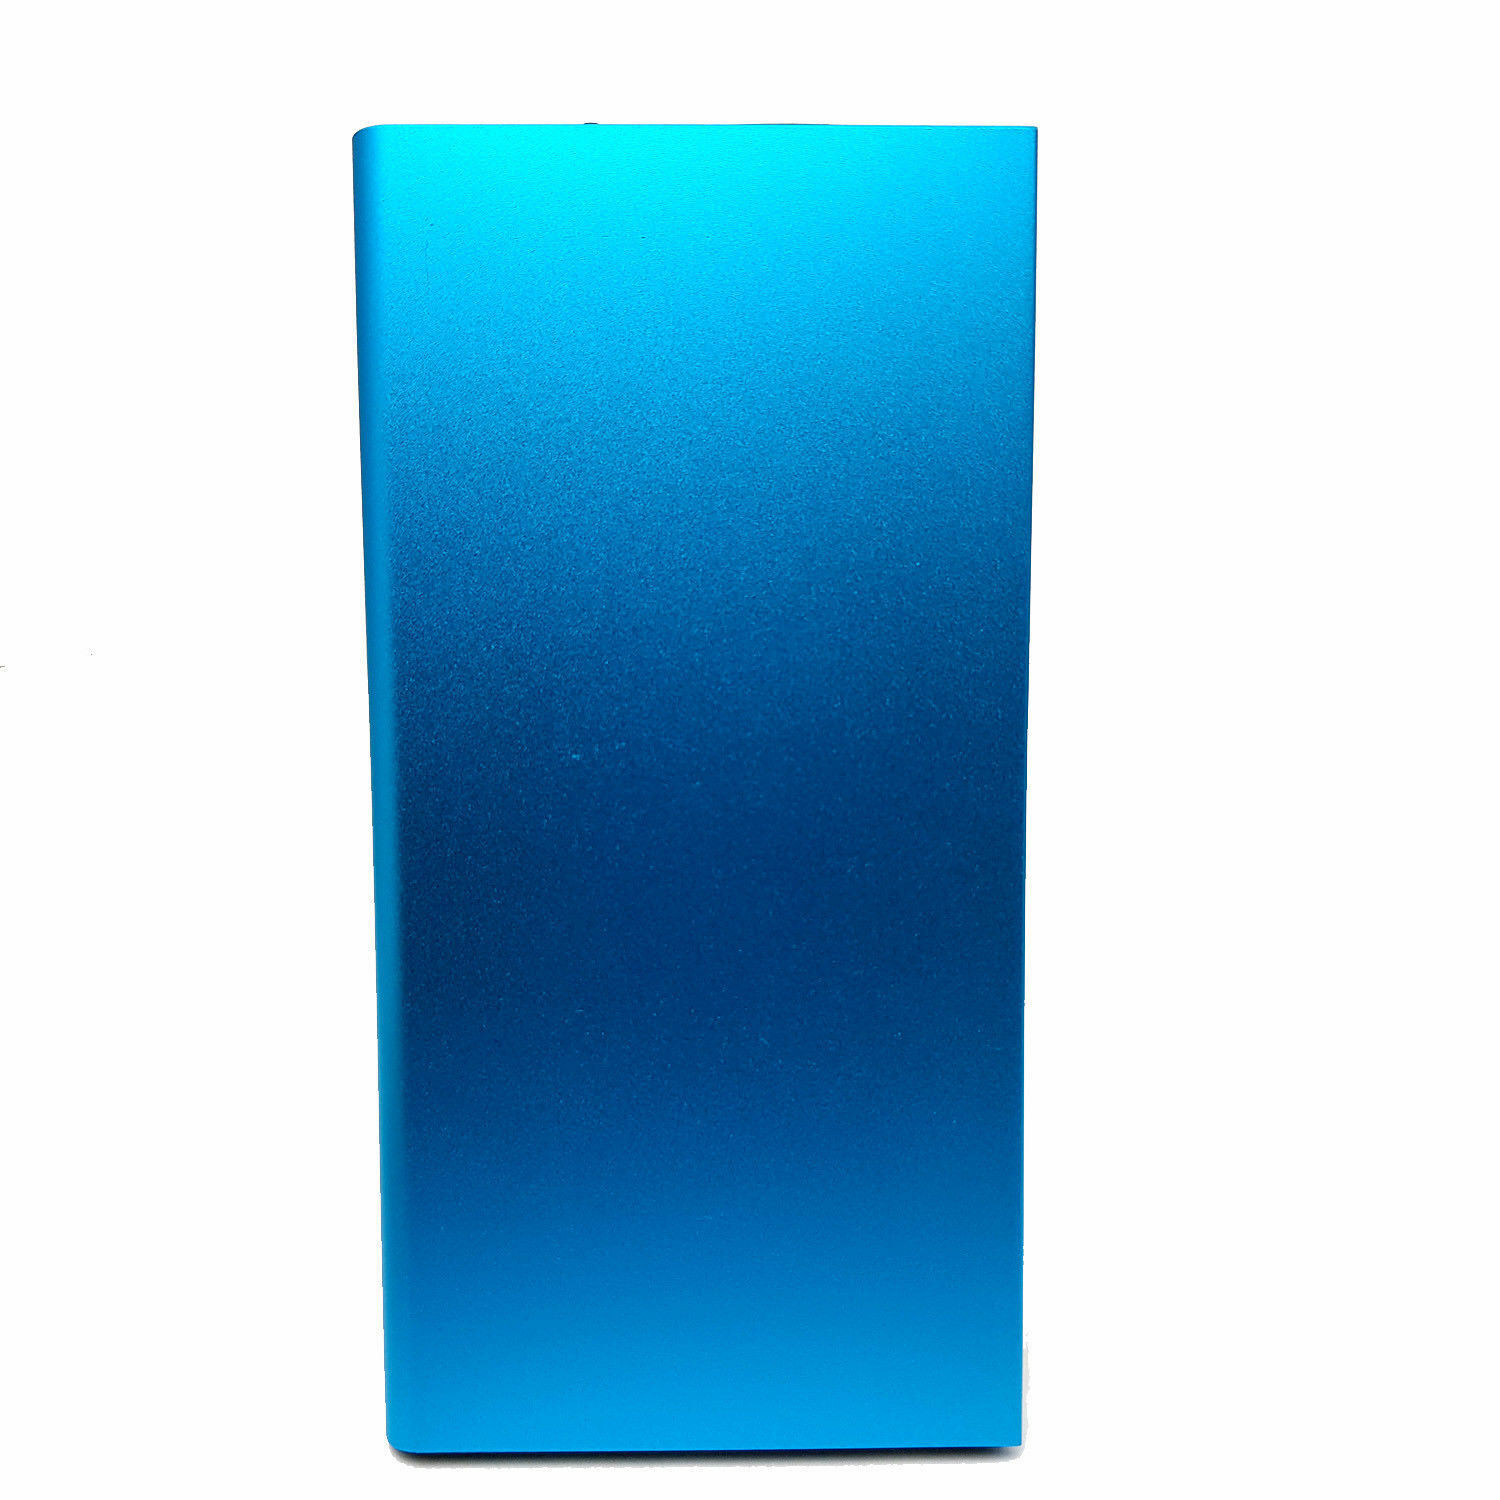 External-50000mAh-Power-Bank-Portable-USB-Charger-for-Tablet-Mobile-BLUE-123347361934-7.jpg